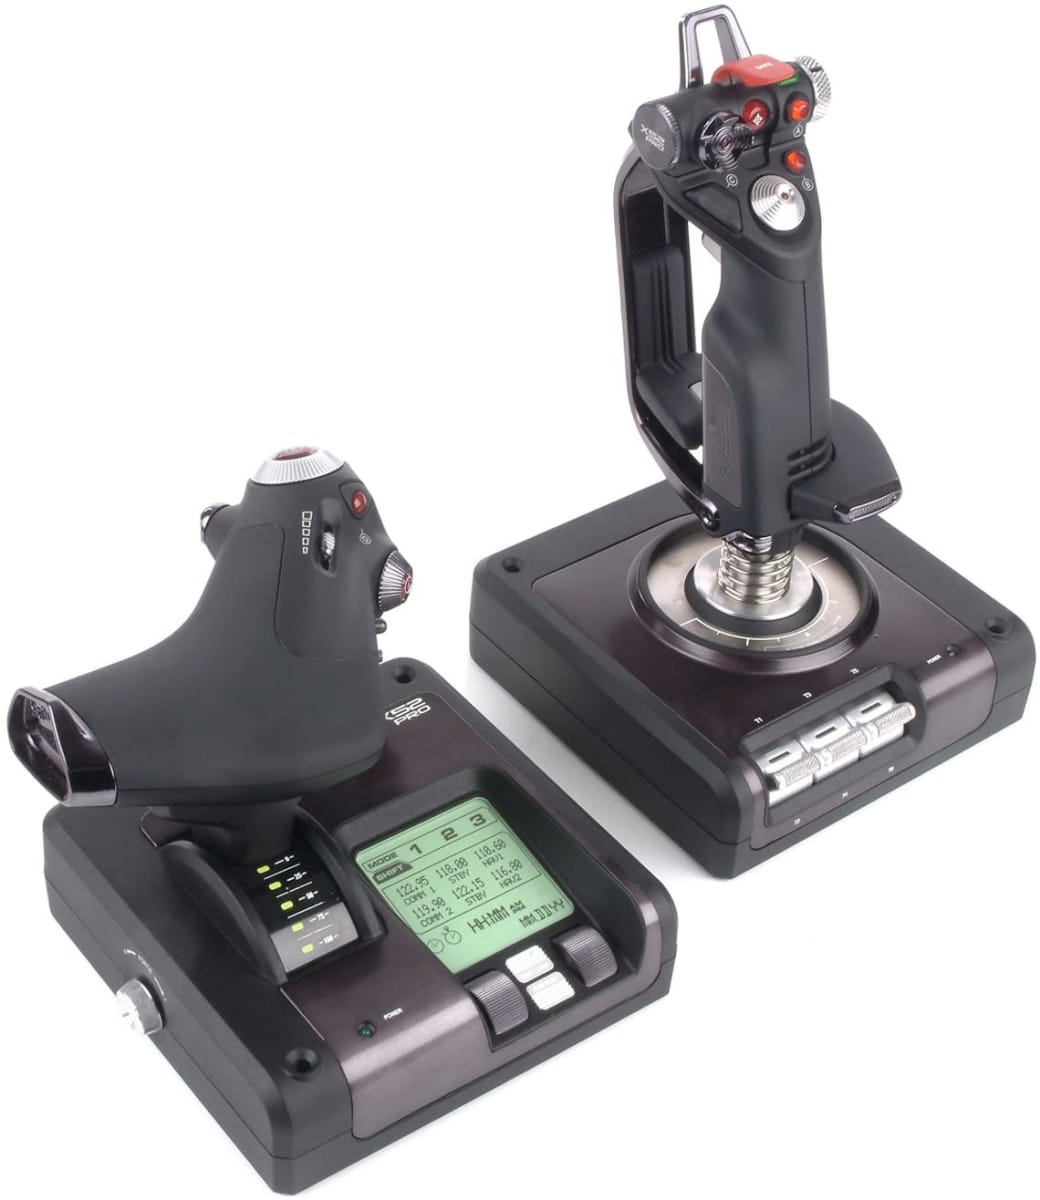 Saitek - Pro Flight X52 Pro Flight System Gaming Controller for PC